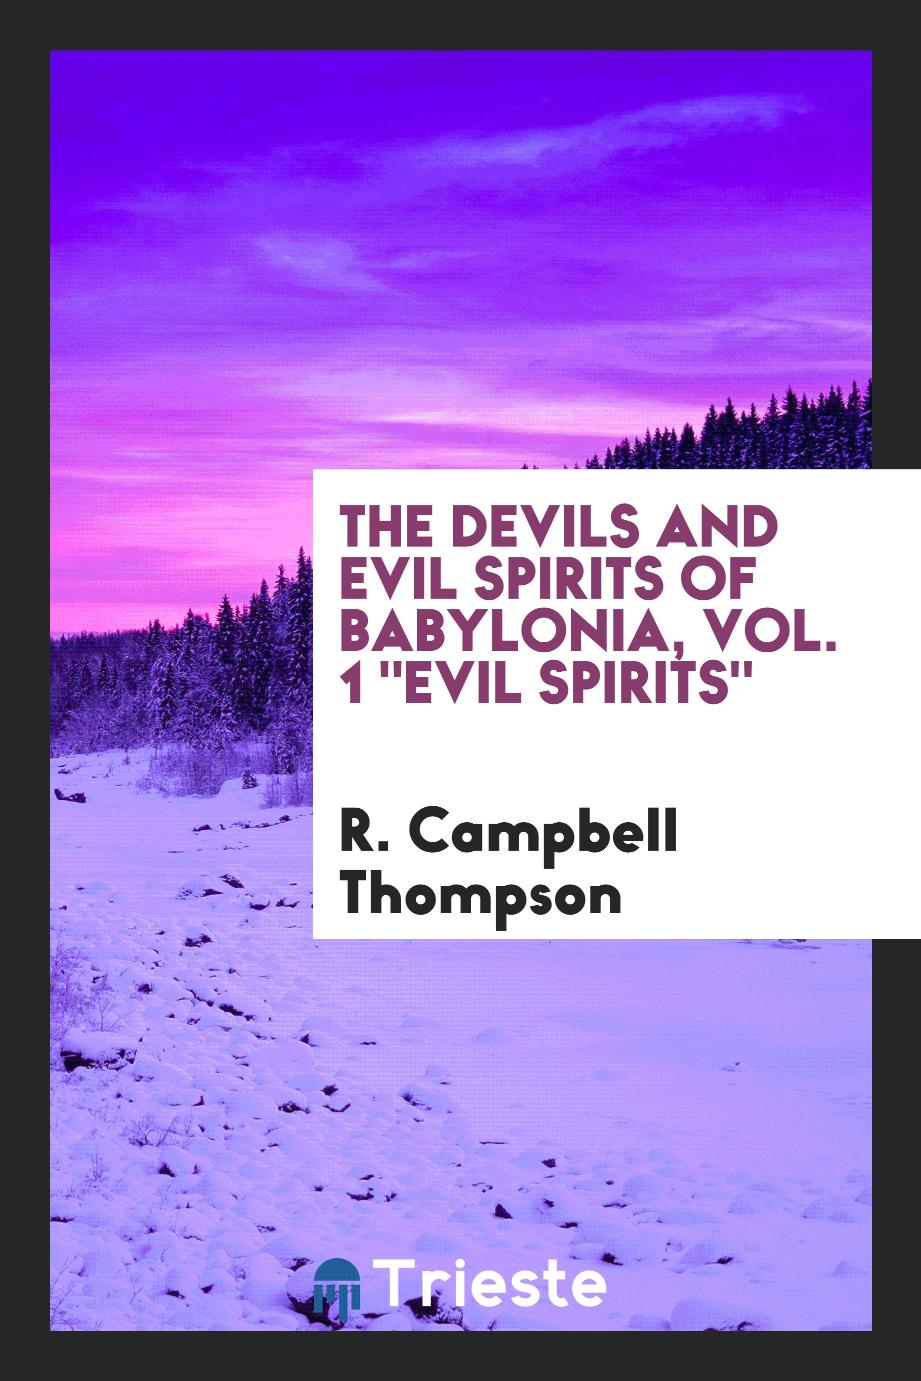 The devils and evil spirits of Babylonia, Vol. 1 "Evil Spirits"